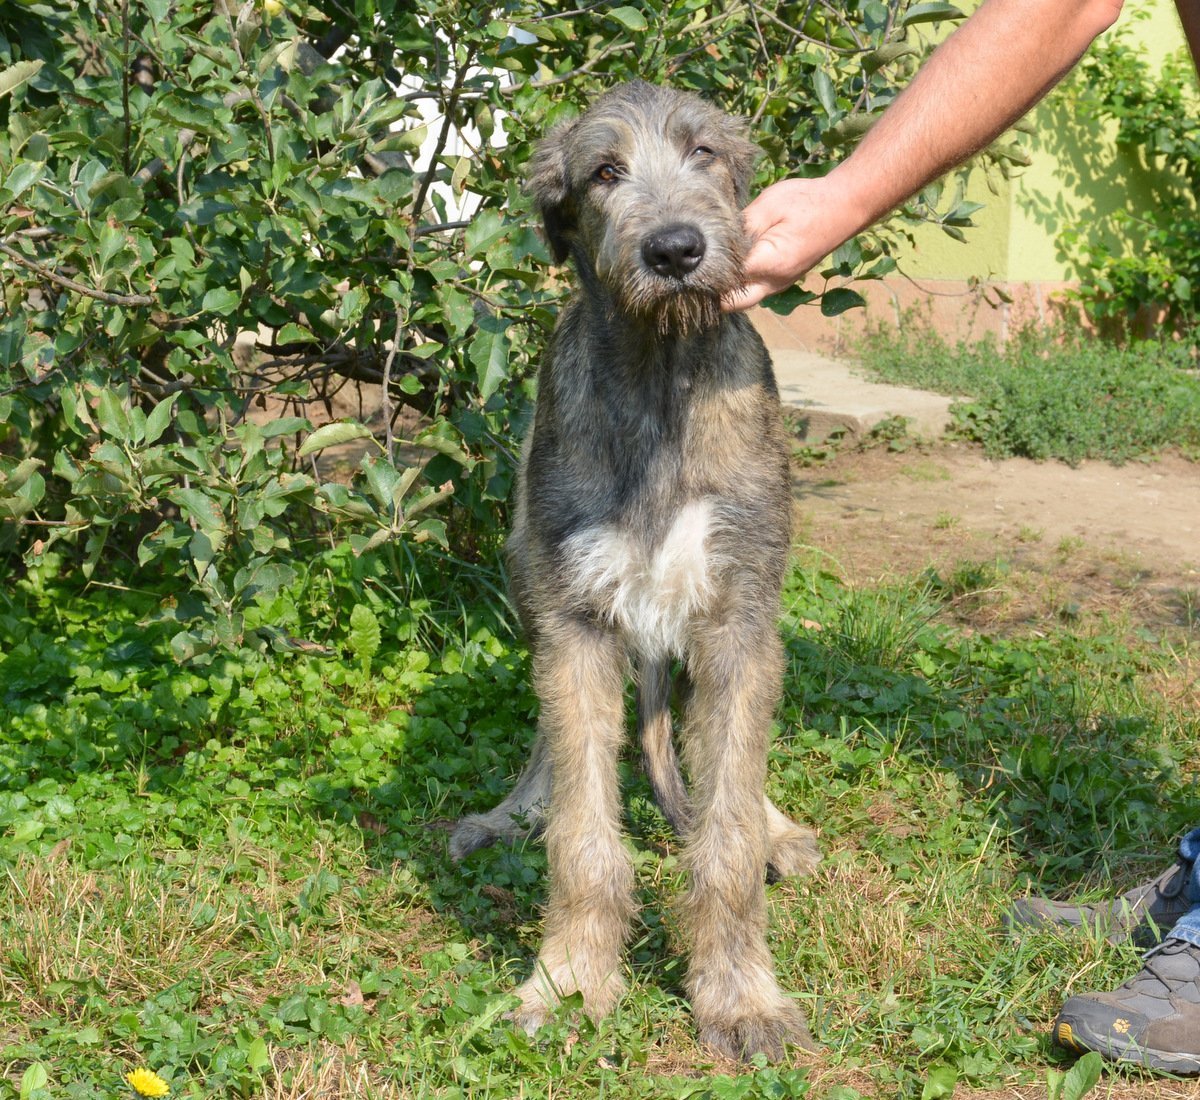 irish wolfhound puppies for sale